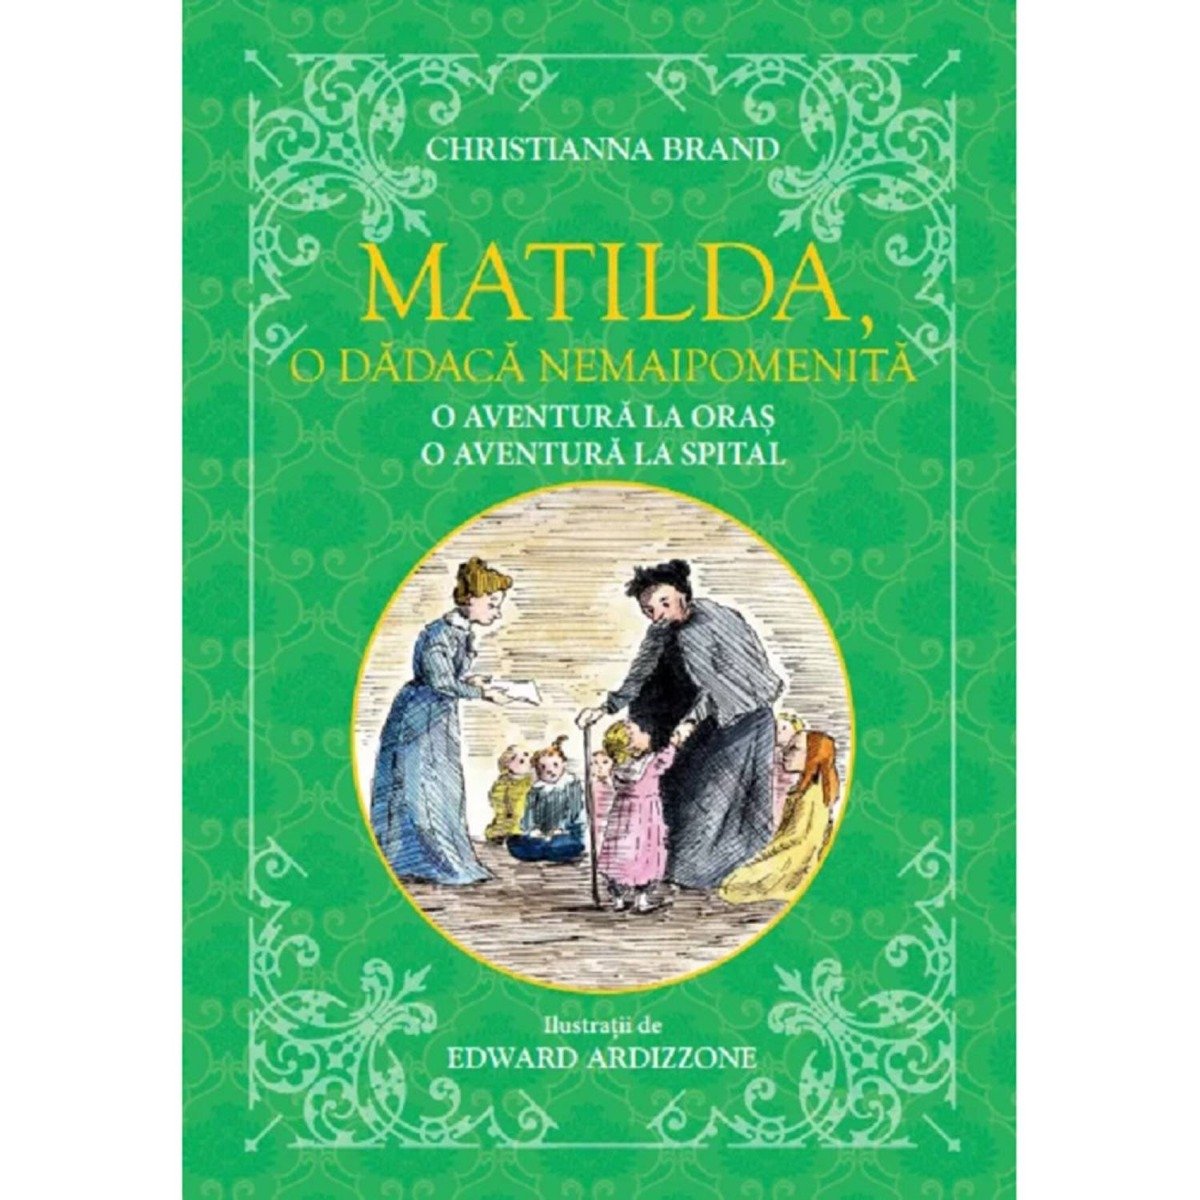 Matilda, o dadaca nemaipomenita. O aventura la oras, o aventura la spital